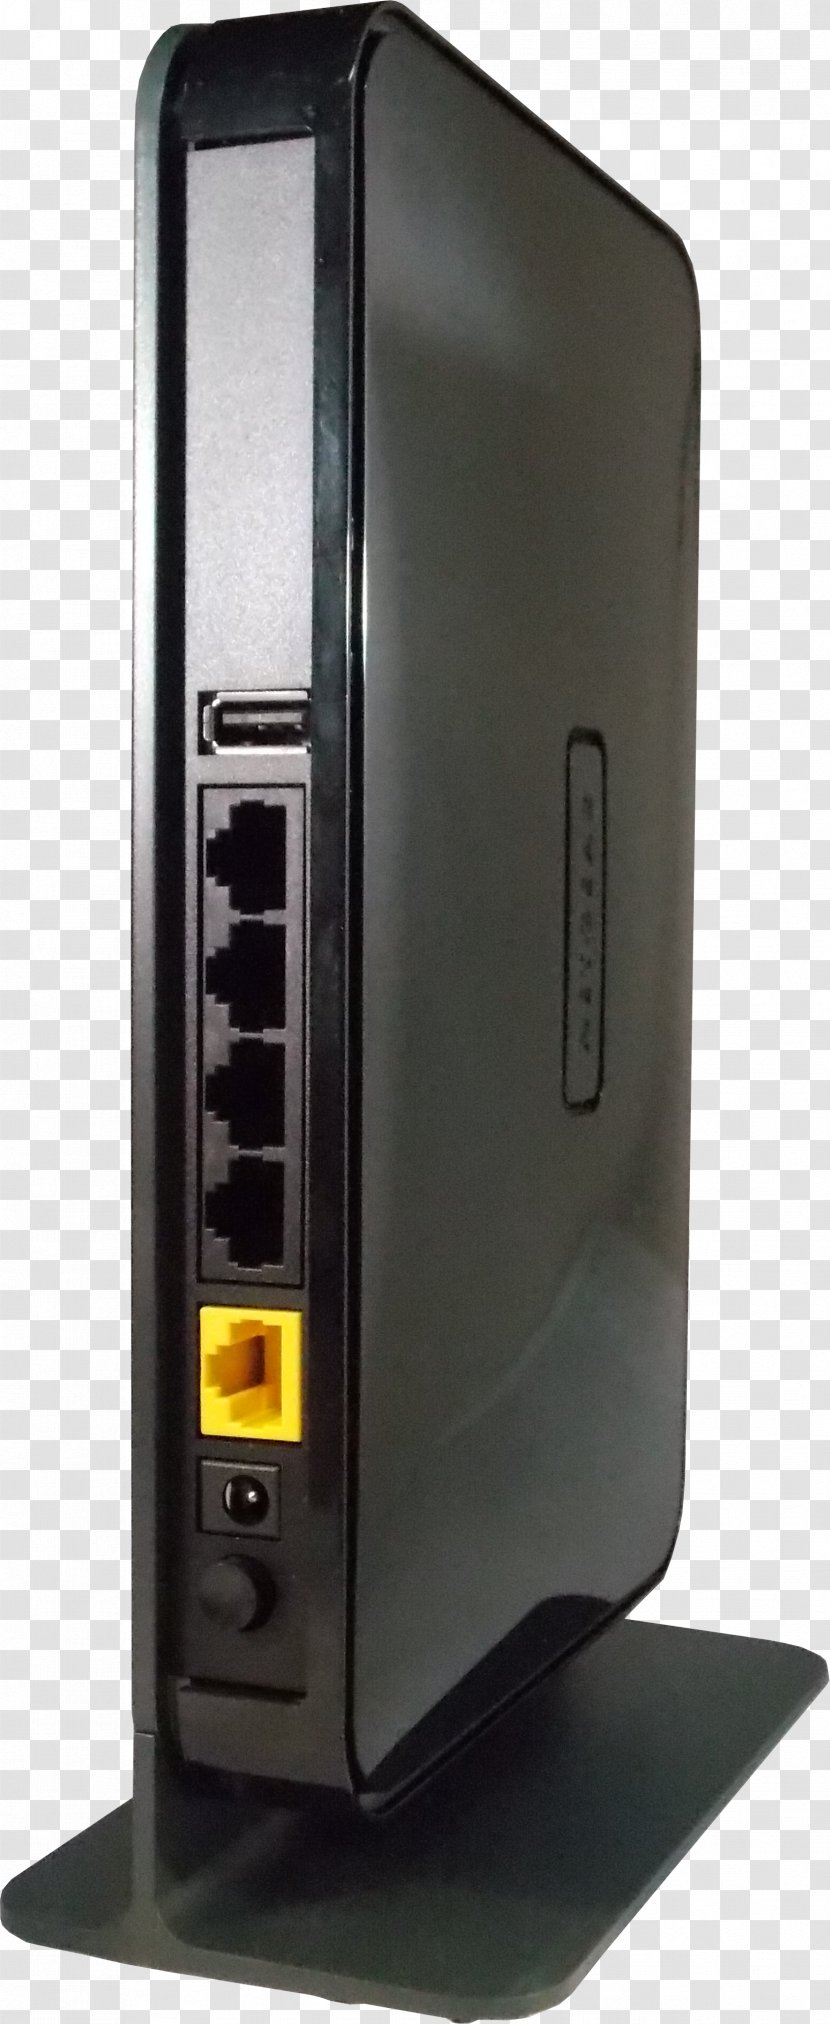 Computer Cases & Housings Netgear Wireless Router Network - Case Transparent PNG